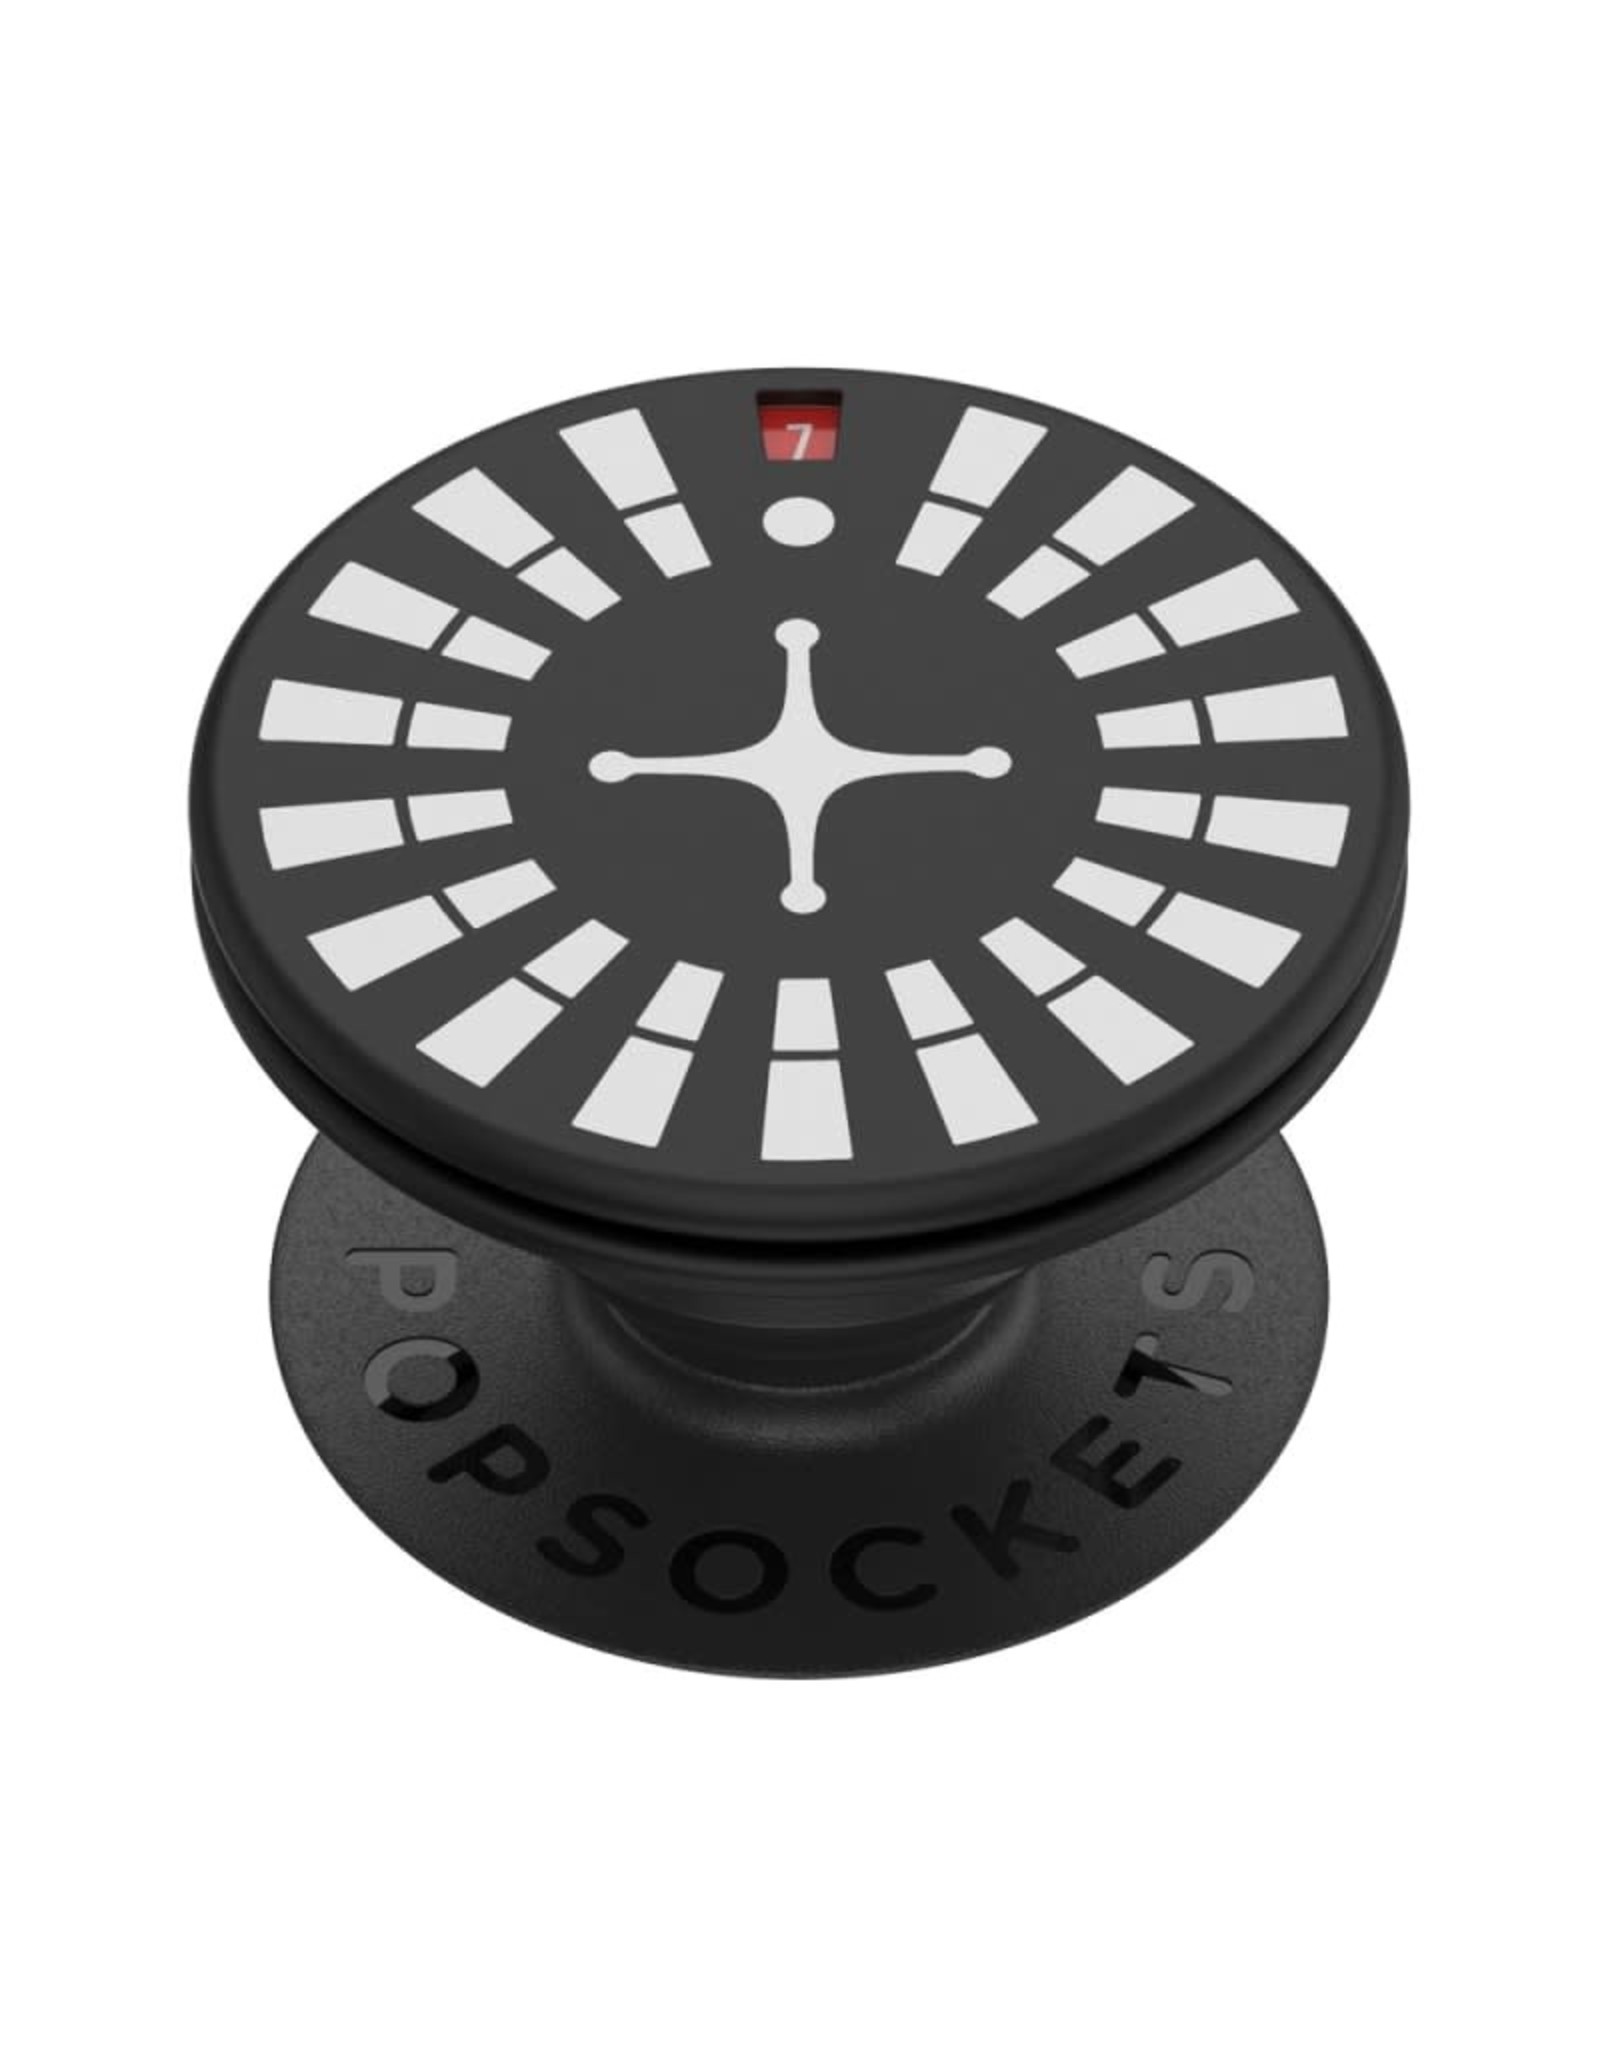 PopSockets Popsockets PopGrip (Gen2) - Backspin Roulette